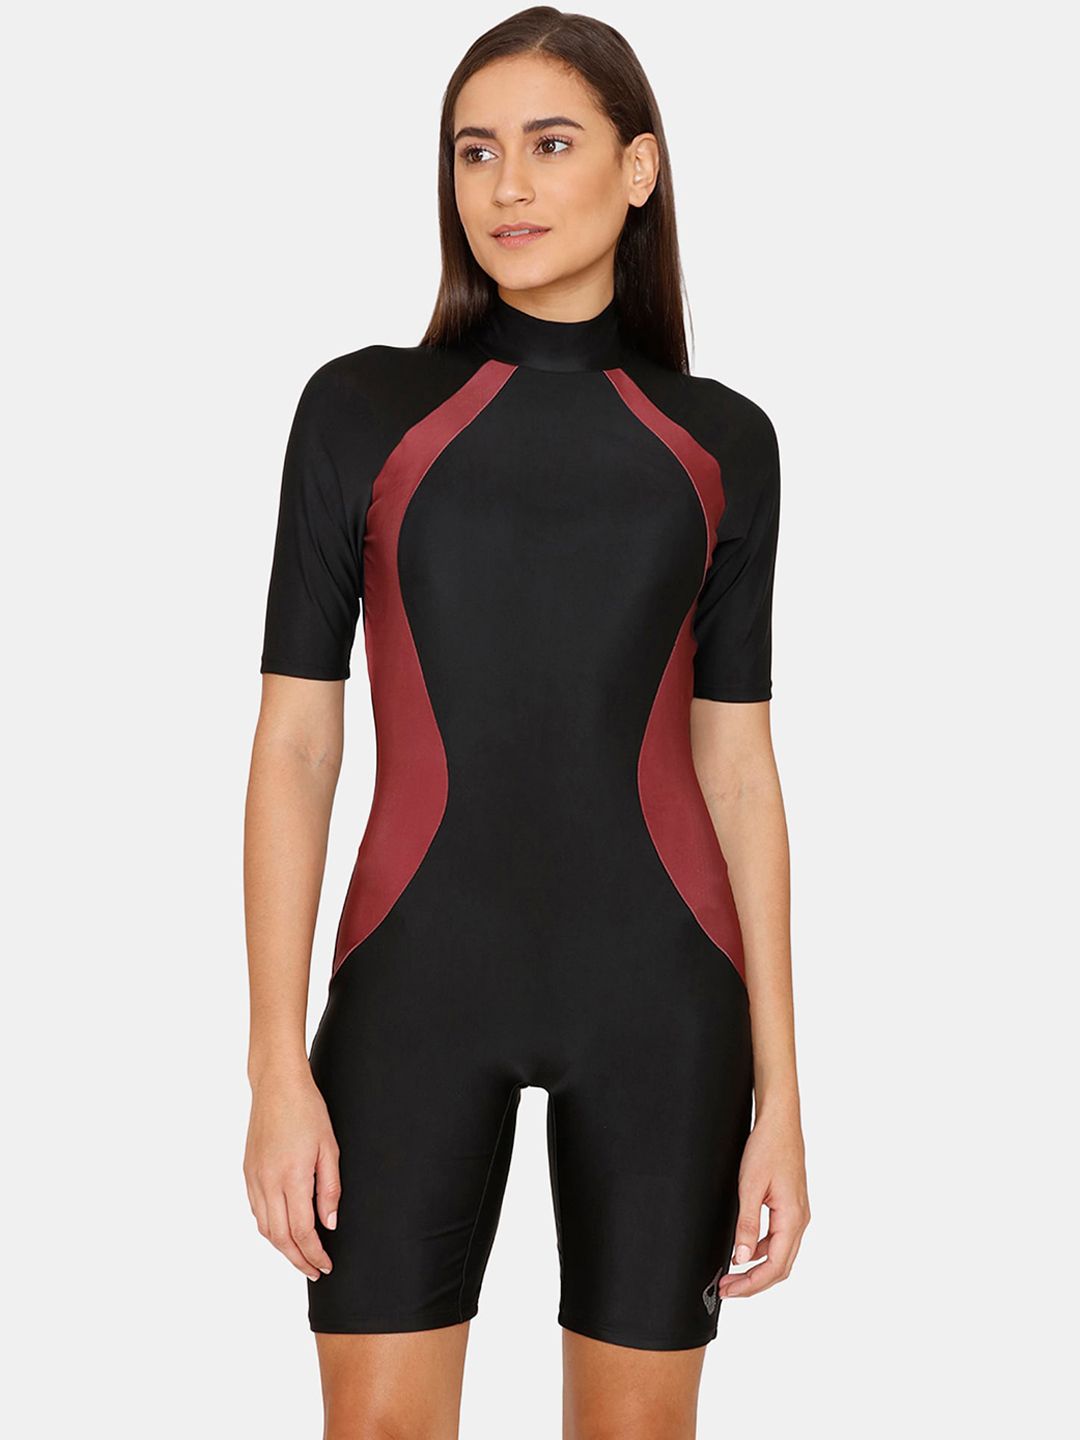 Zelocity by Zivame Women Black & Maroon Colourblocked Swimsuit Price in India